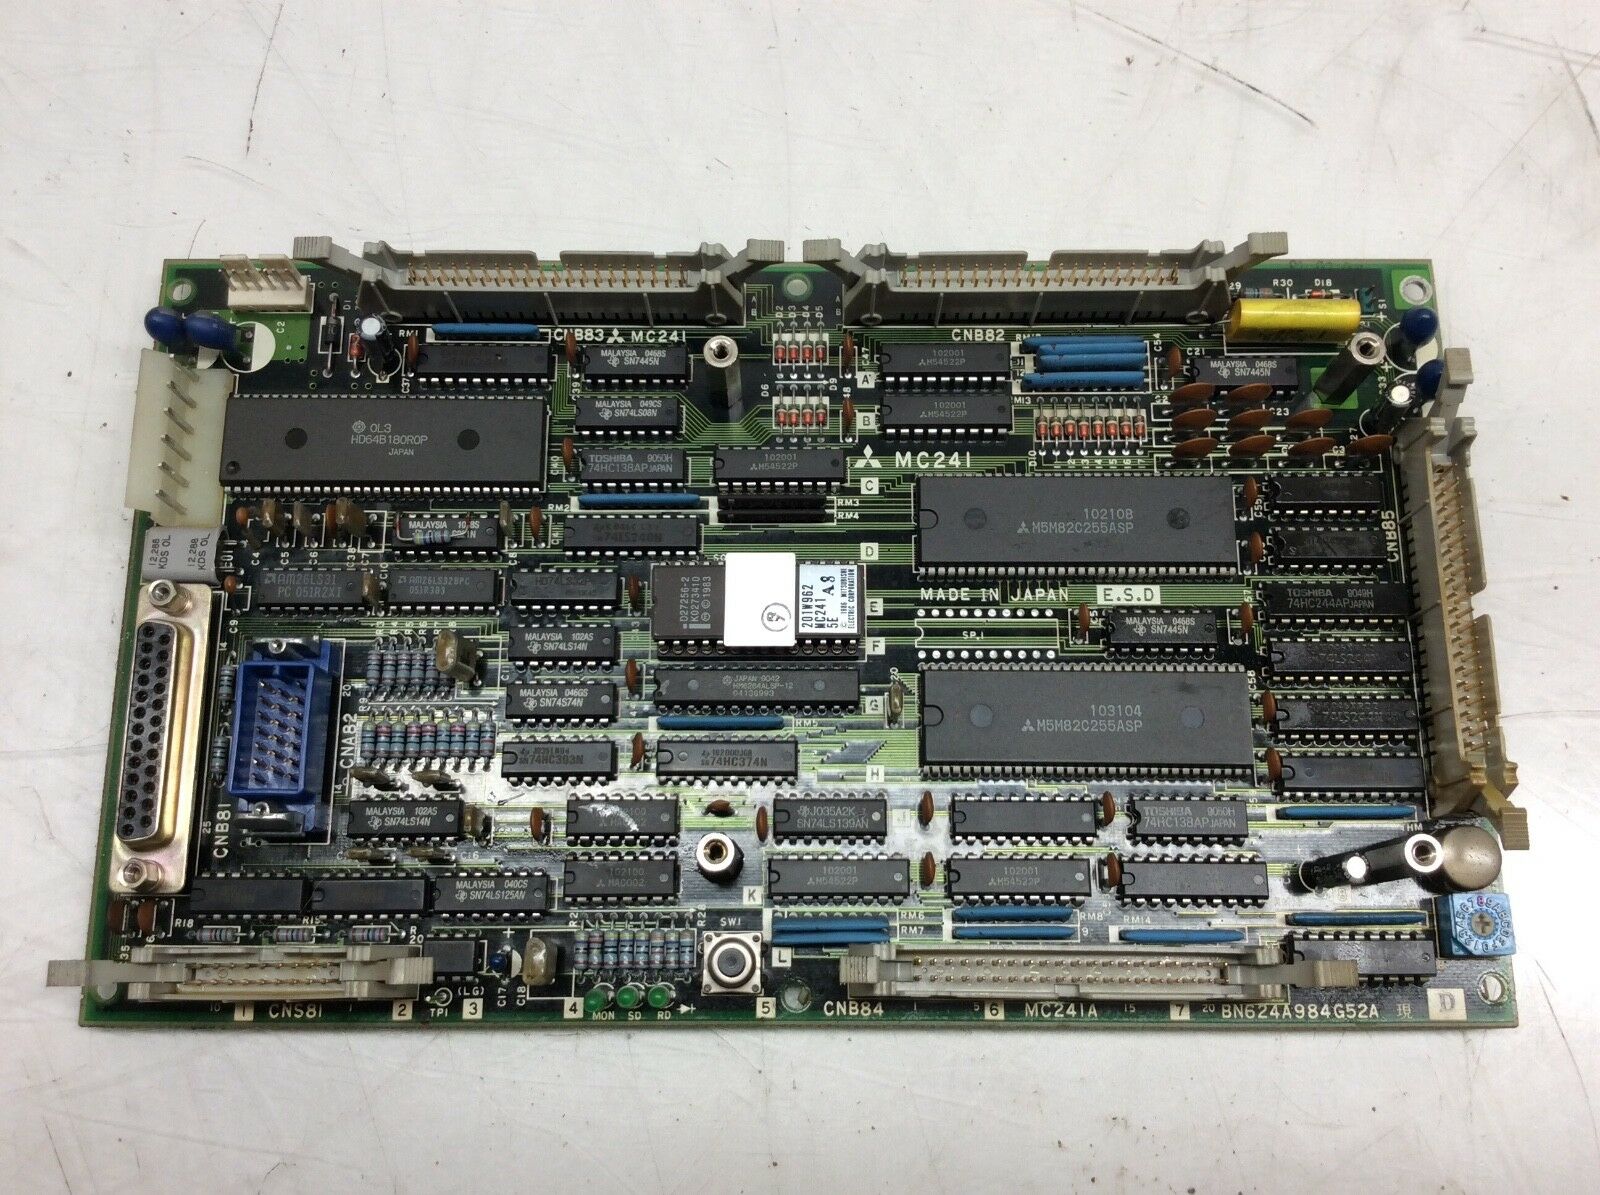 Mitsubishi Pc Board, MC241A, BN624A984G52A, Rev D, 